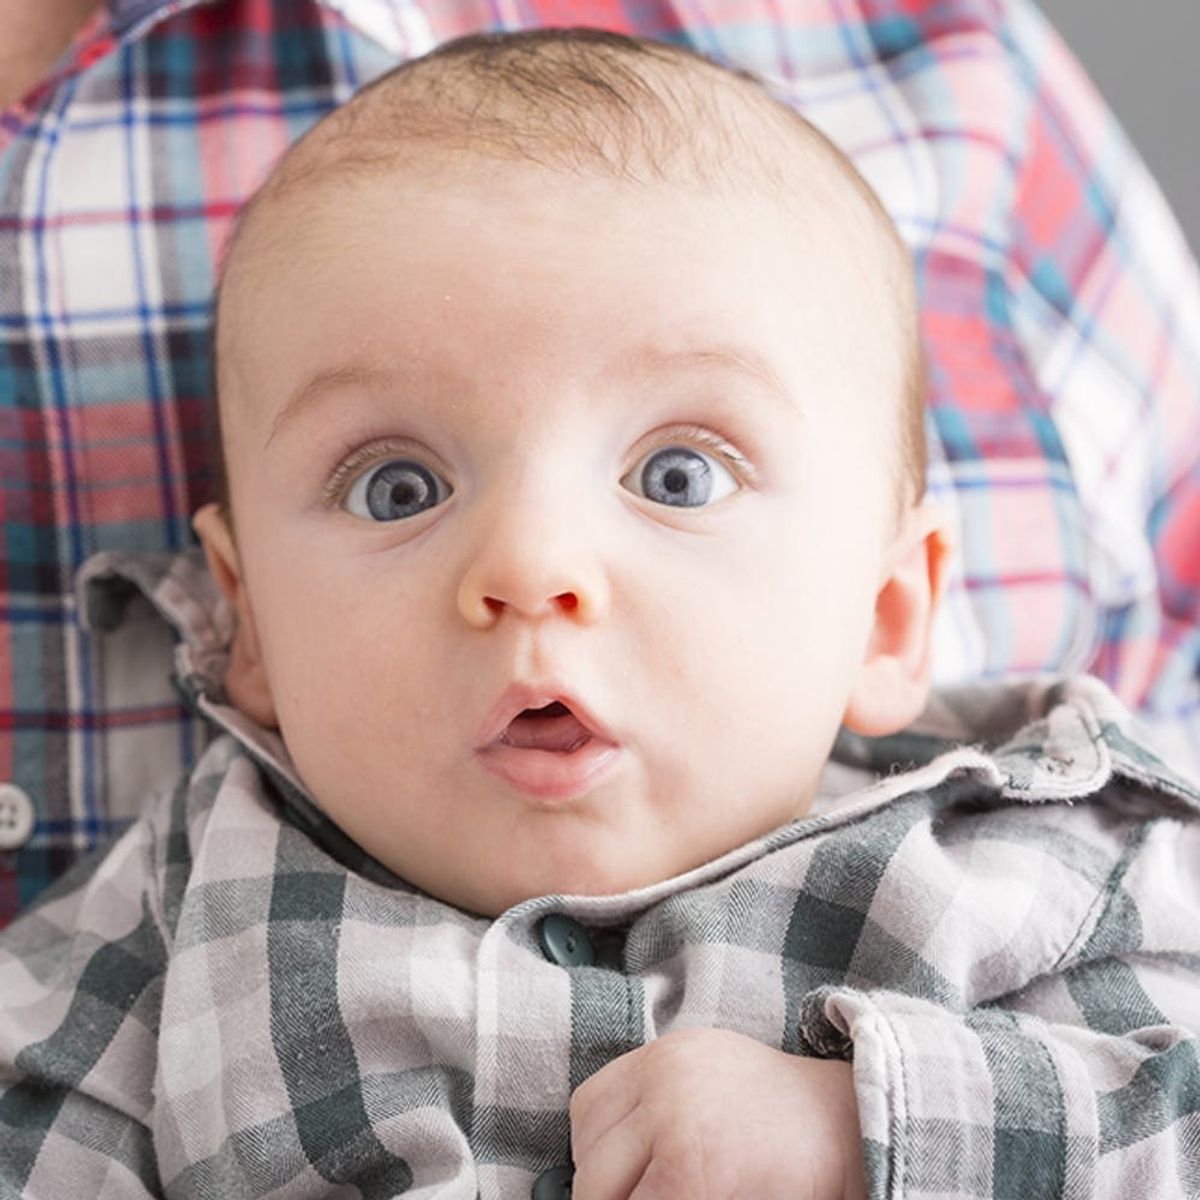 20 Pet Names That Make Adorable Baby Names